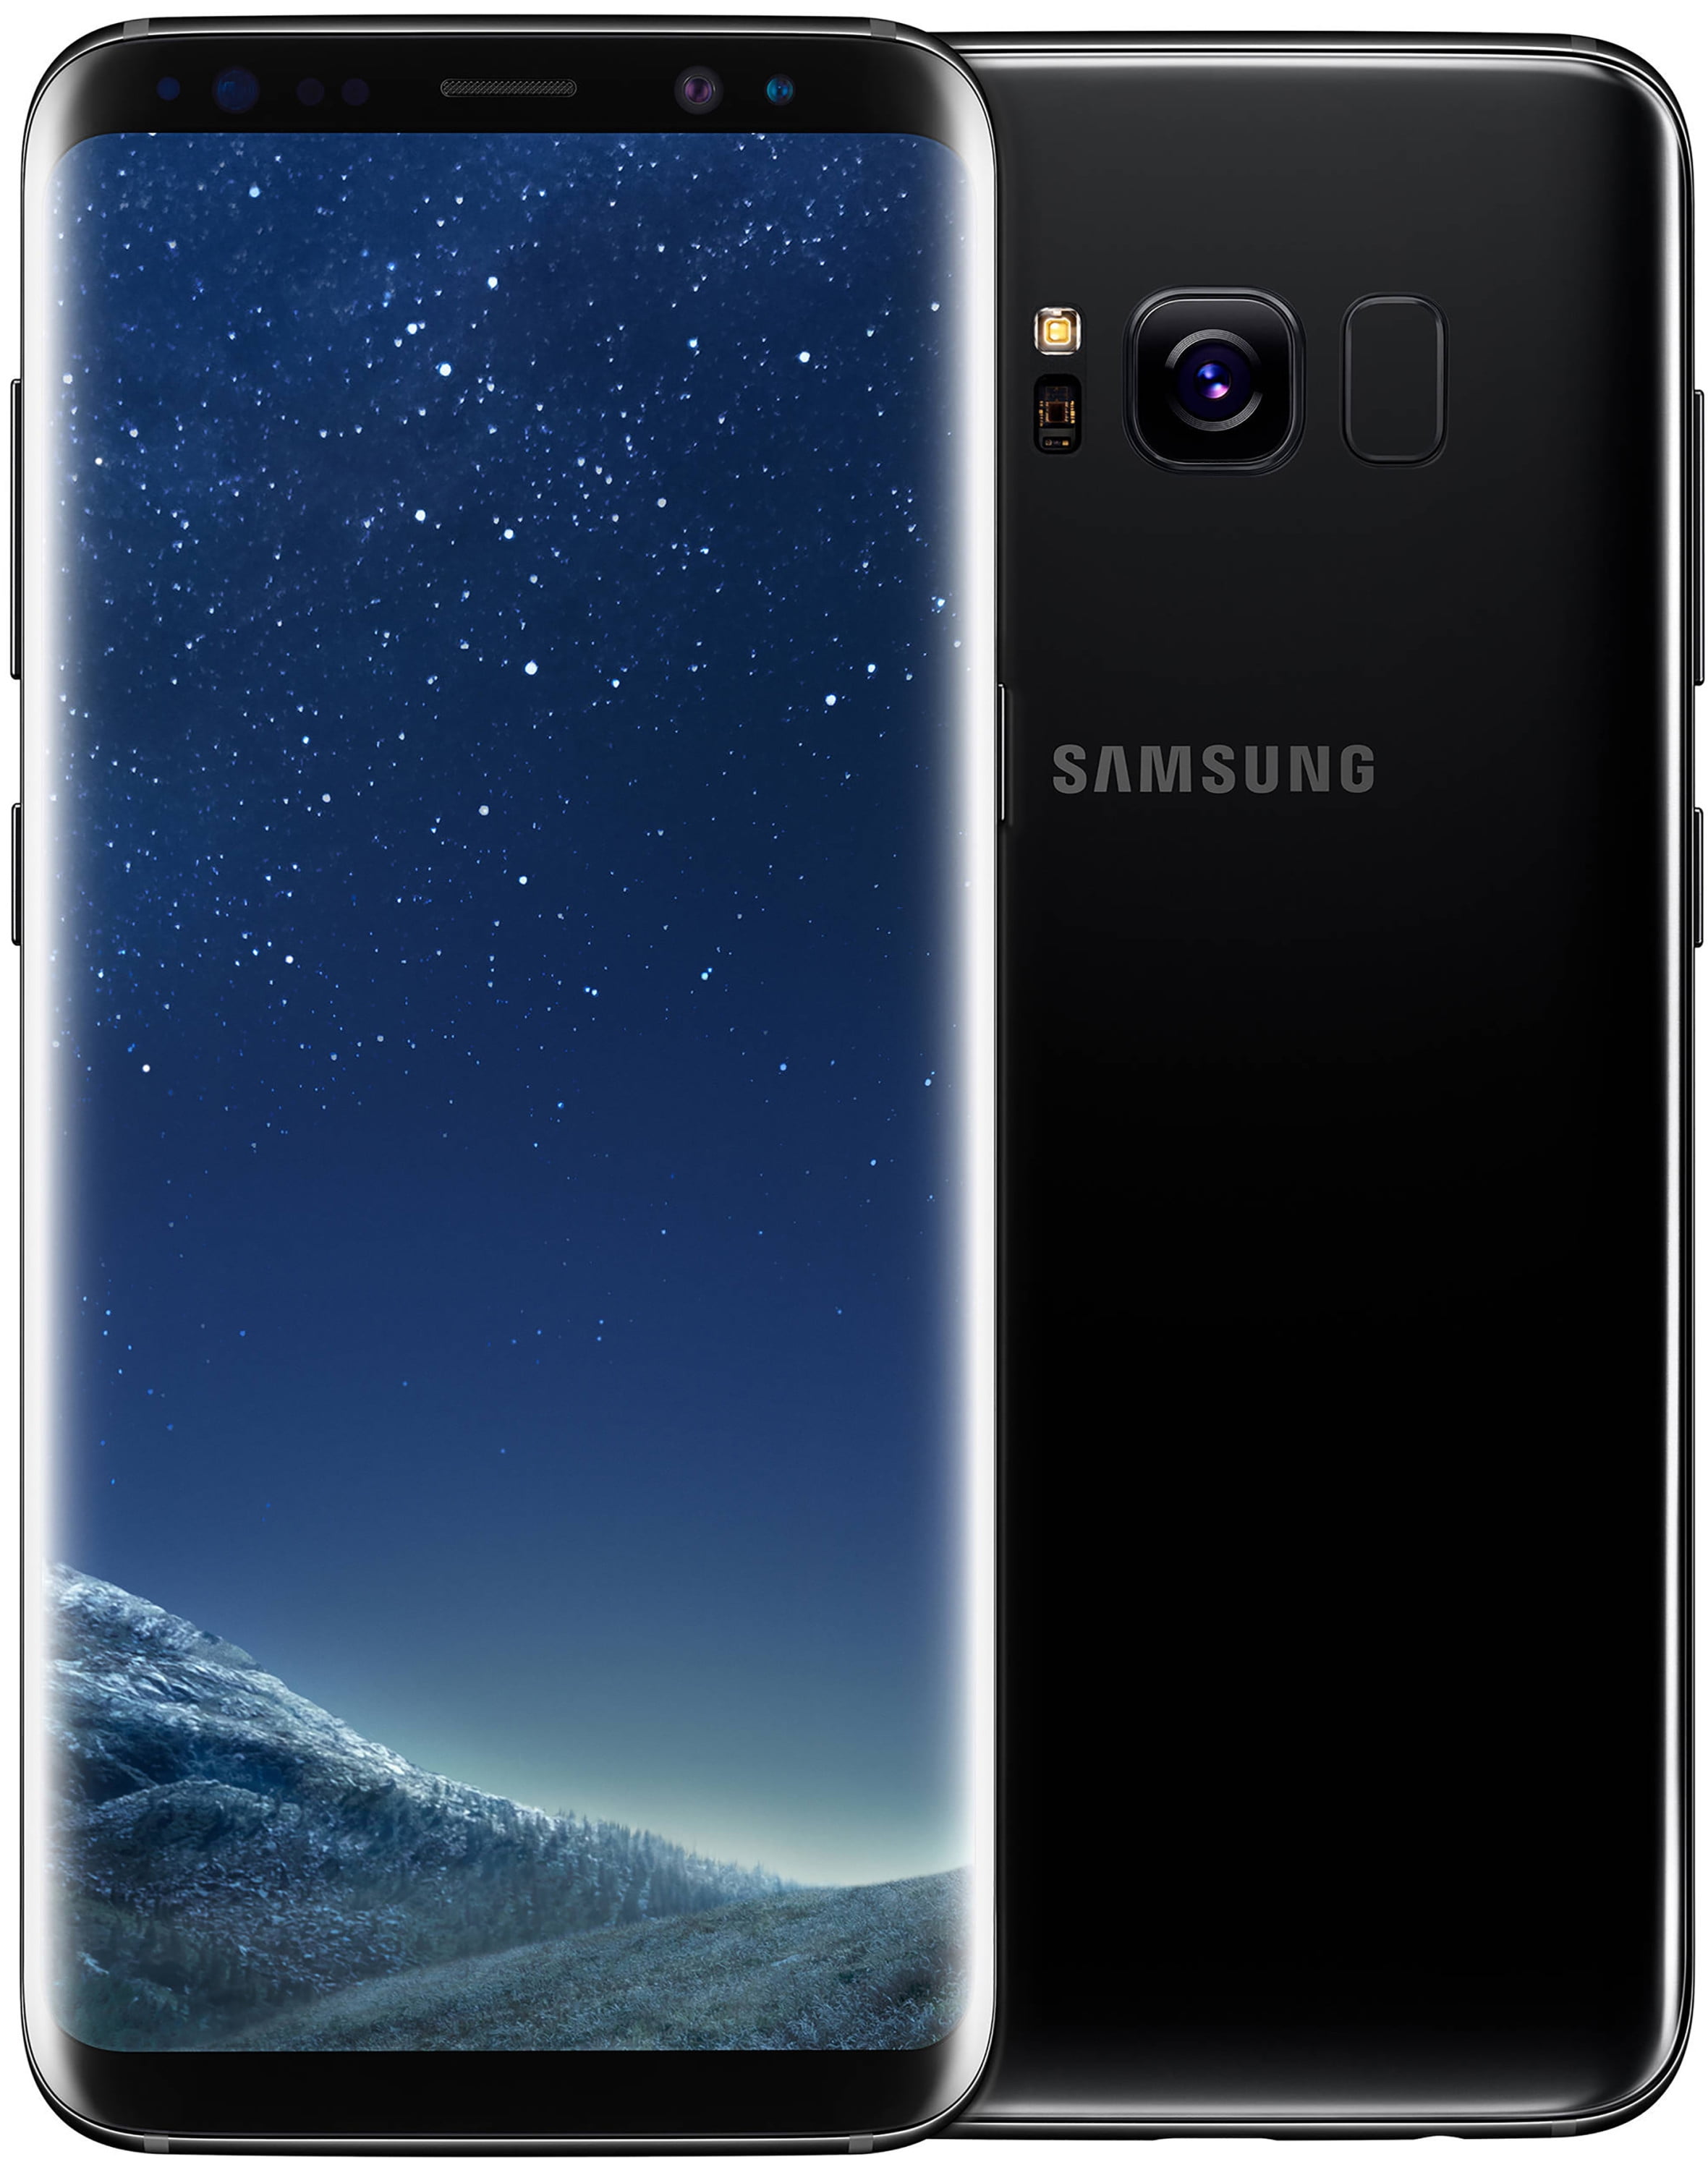 SAMSUNG S8 G950U 64GB Unlocked GSM Phone Version) with 12MP Camera (USA Version) Midnight Black (Refurbished) - Walmart.com